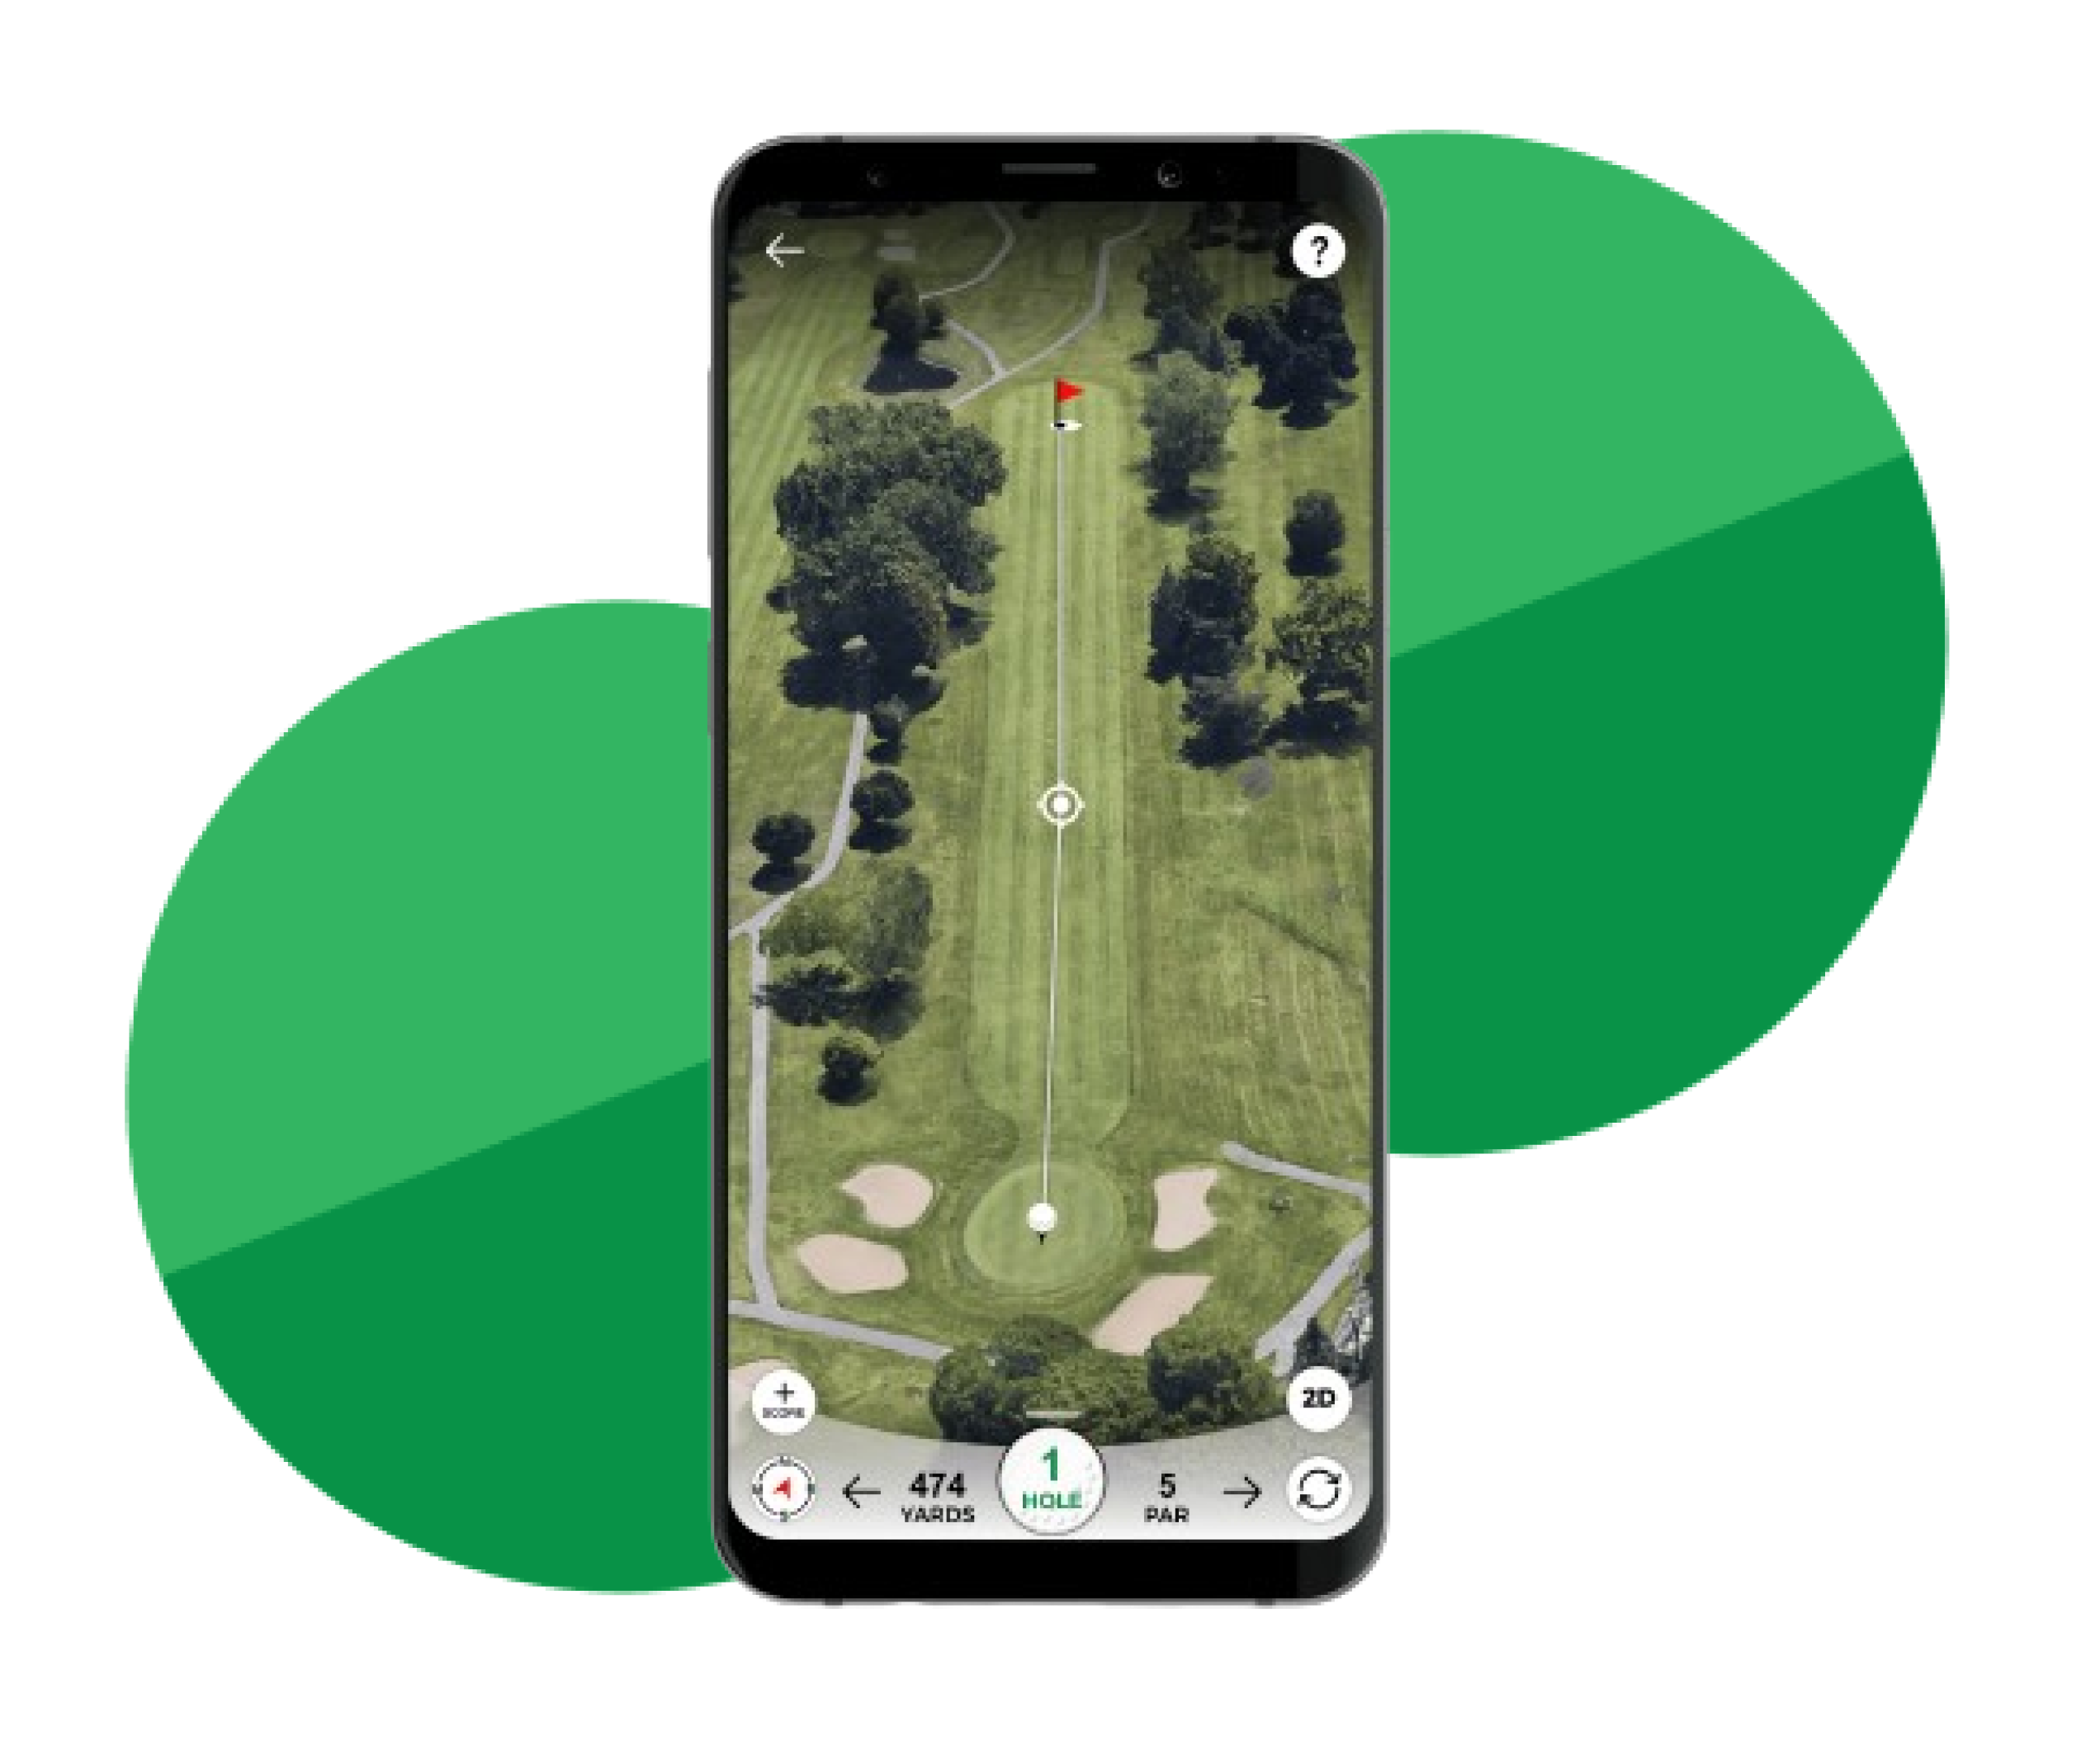 Custom Golf Mobile App & Tee Times Booking